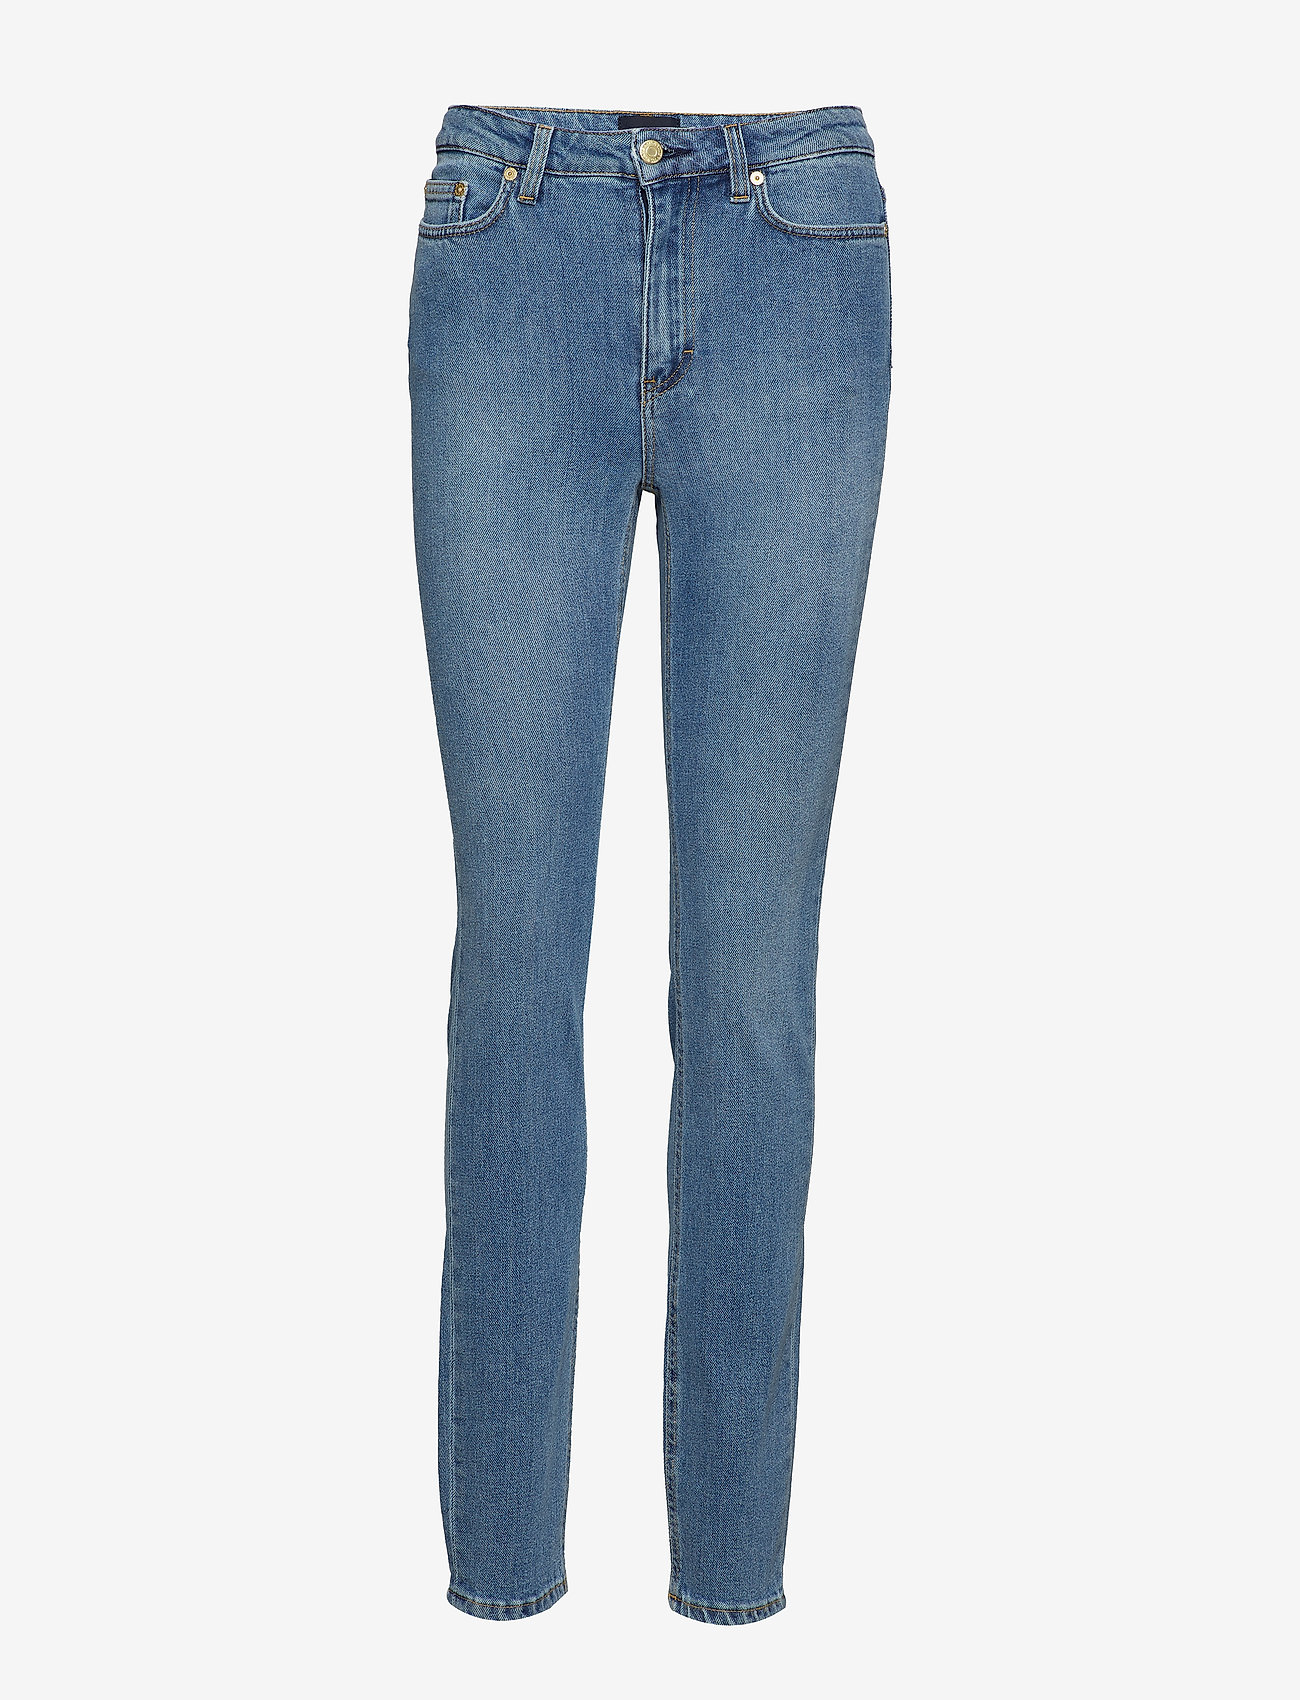 Filippa K - Vicky Washed Jean - slim fit jeans - mid blue - 0